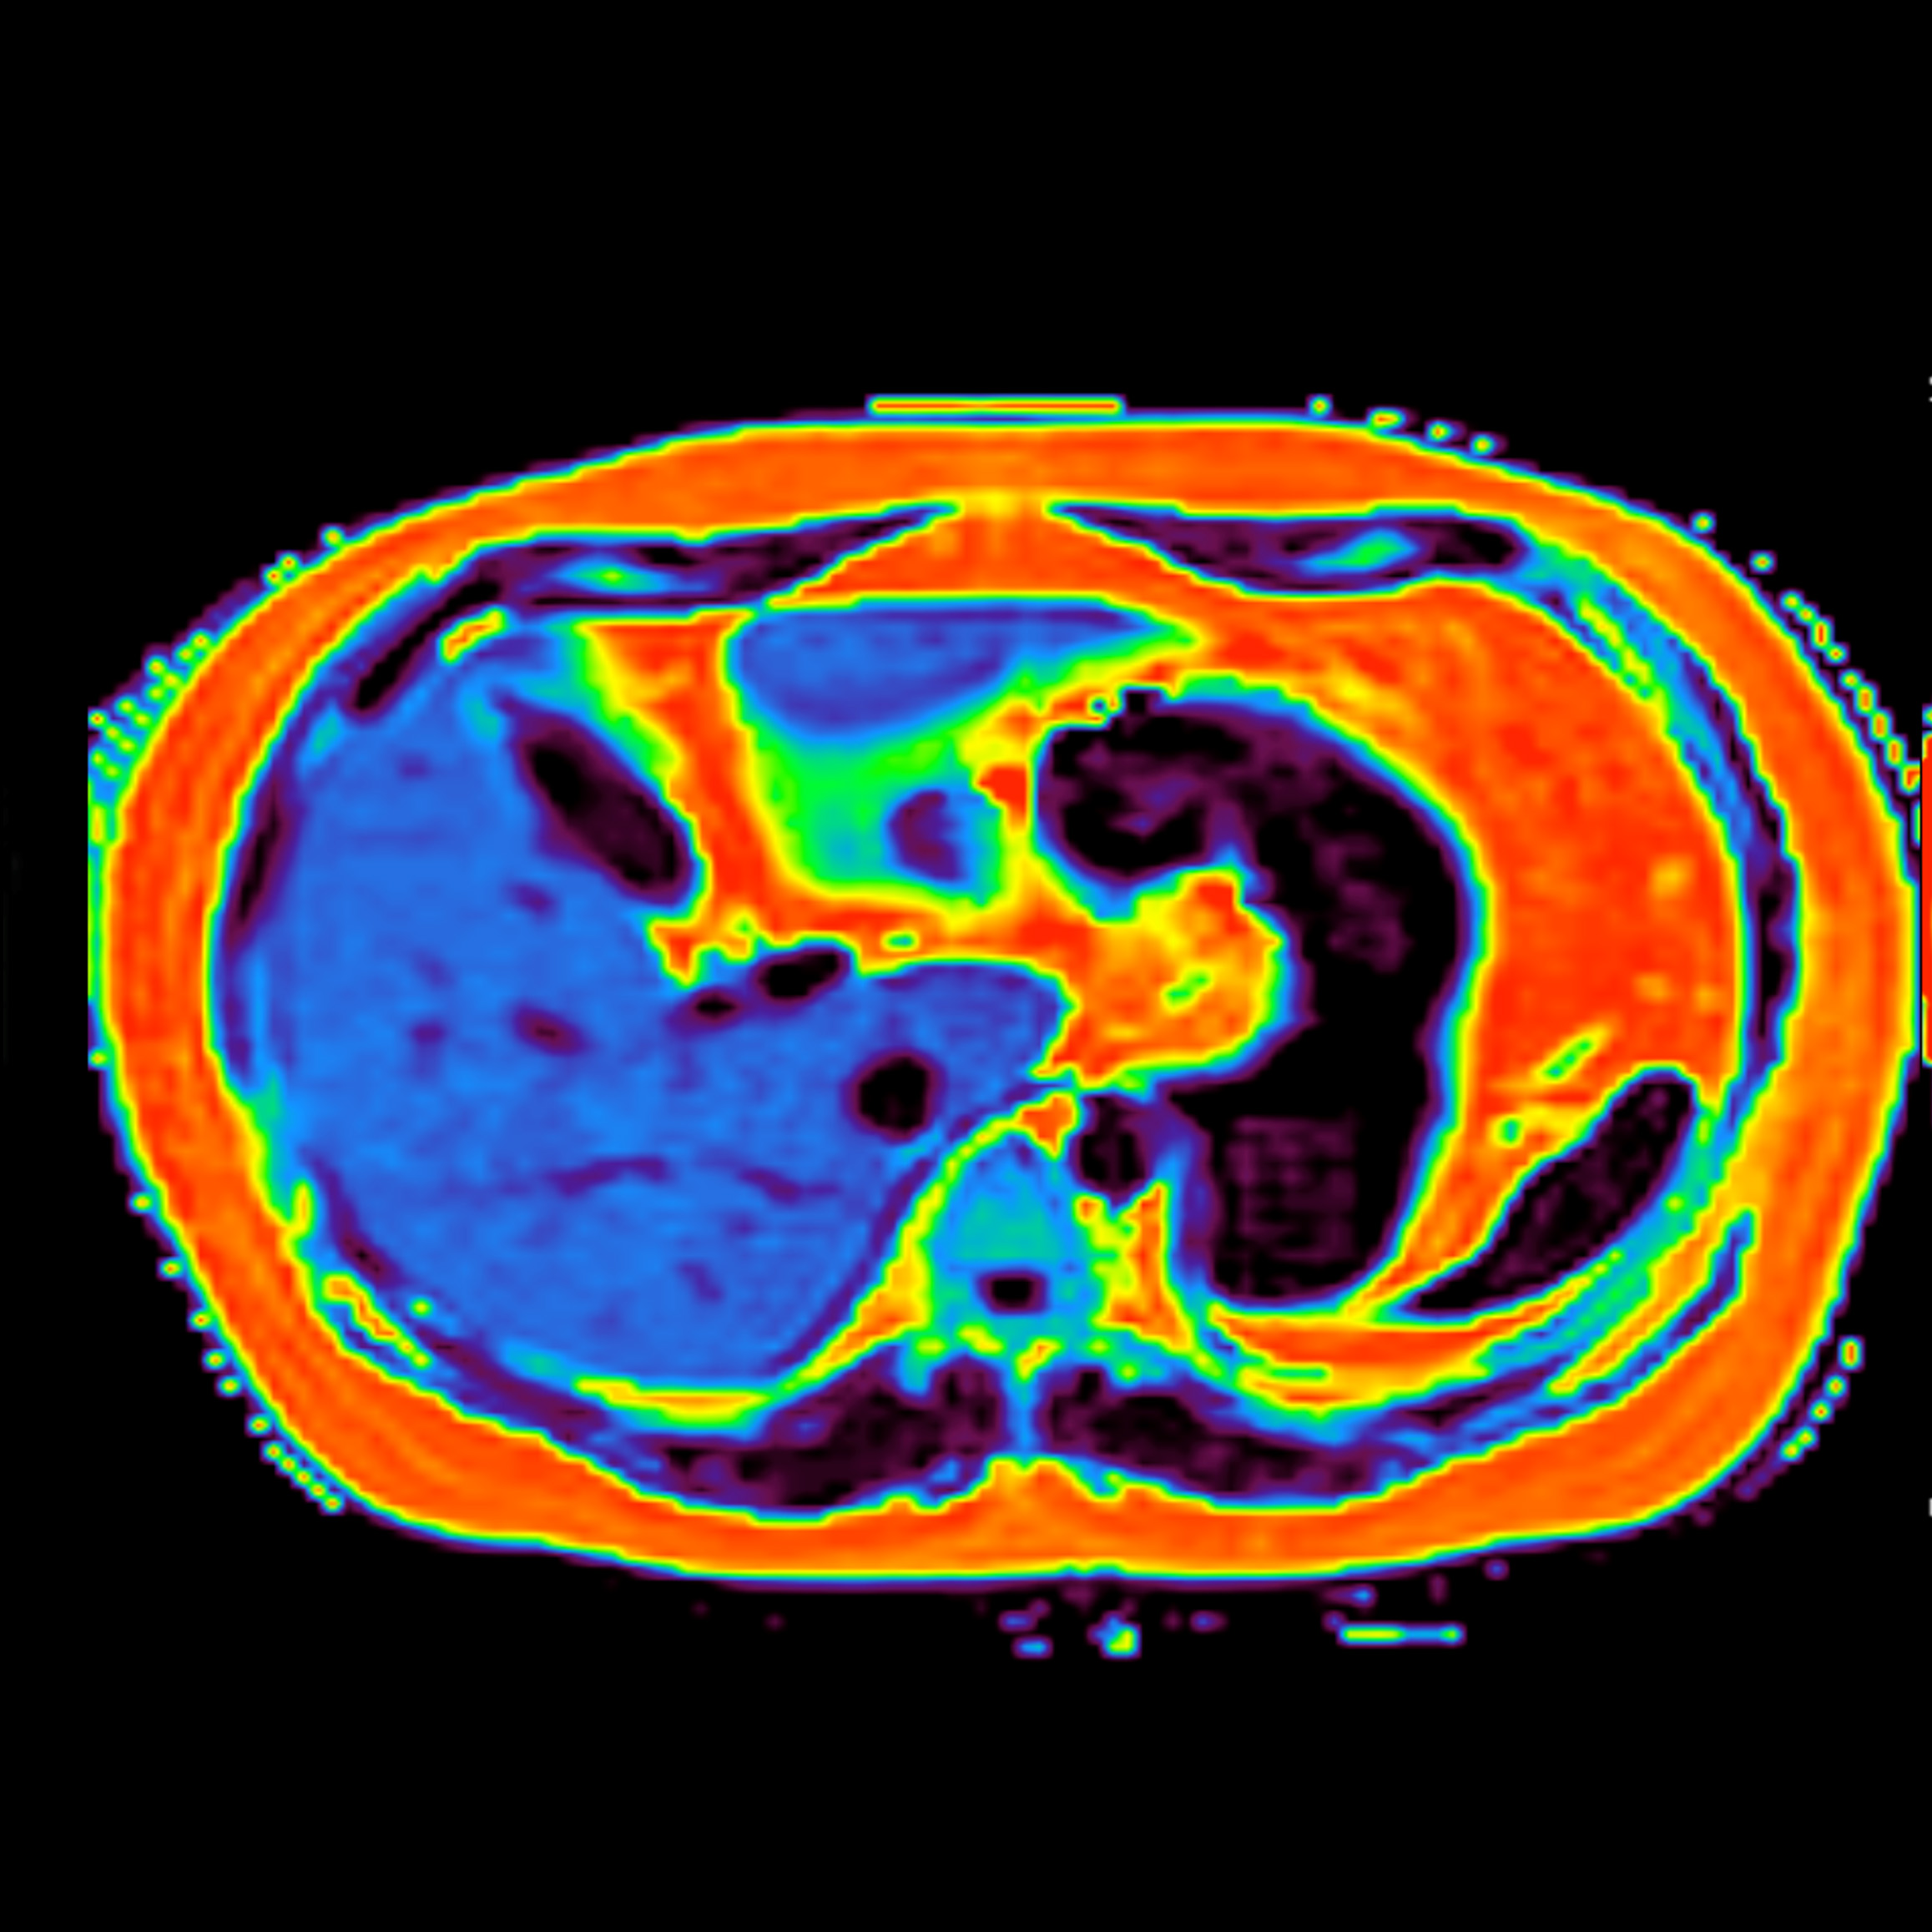 Non-Invasive Fat Imaging and Quantification